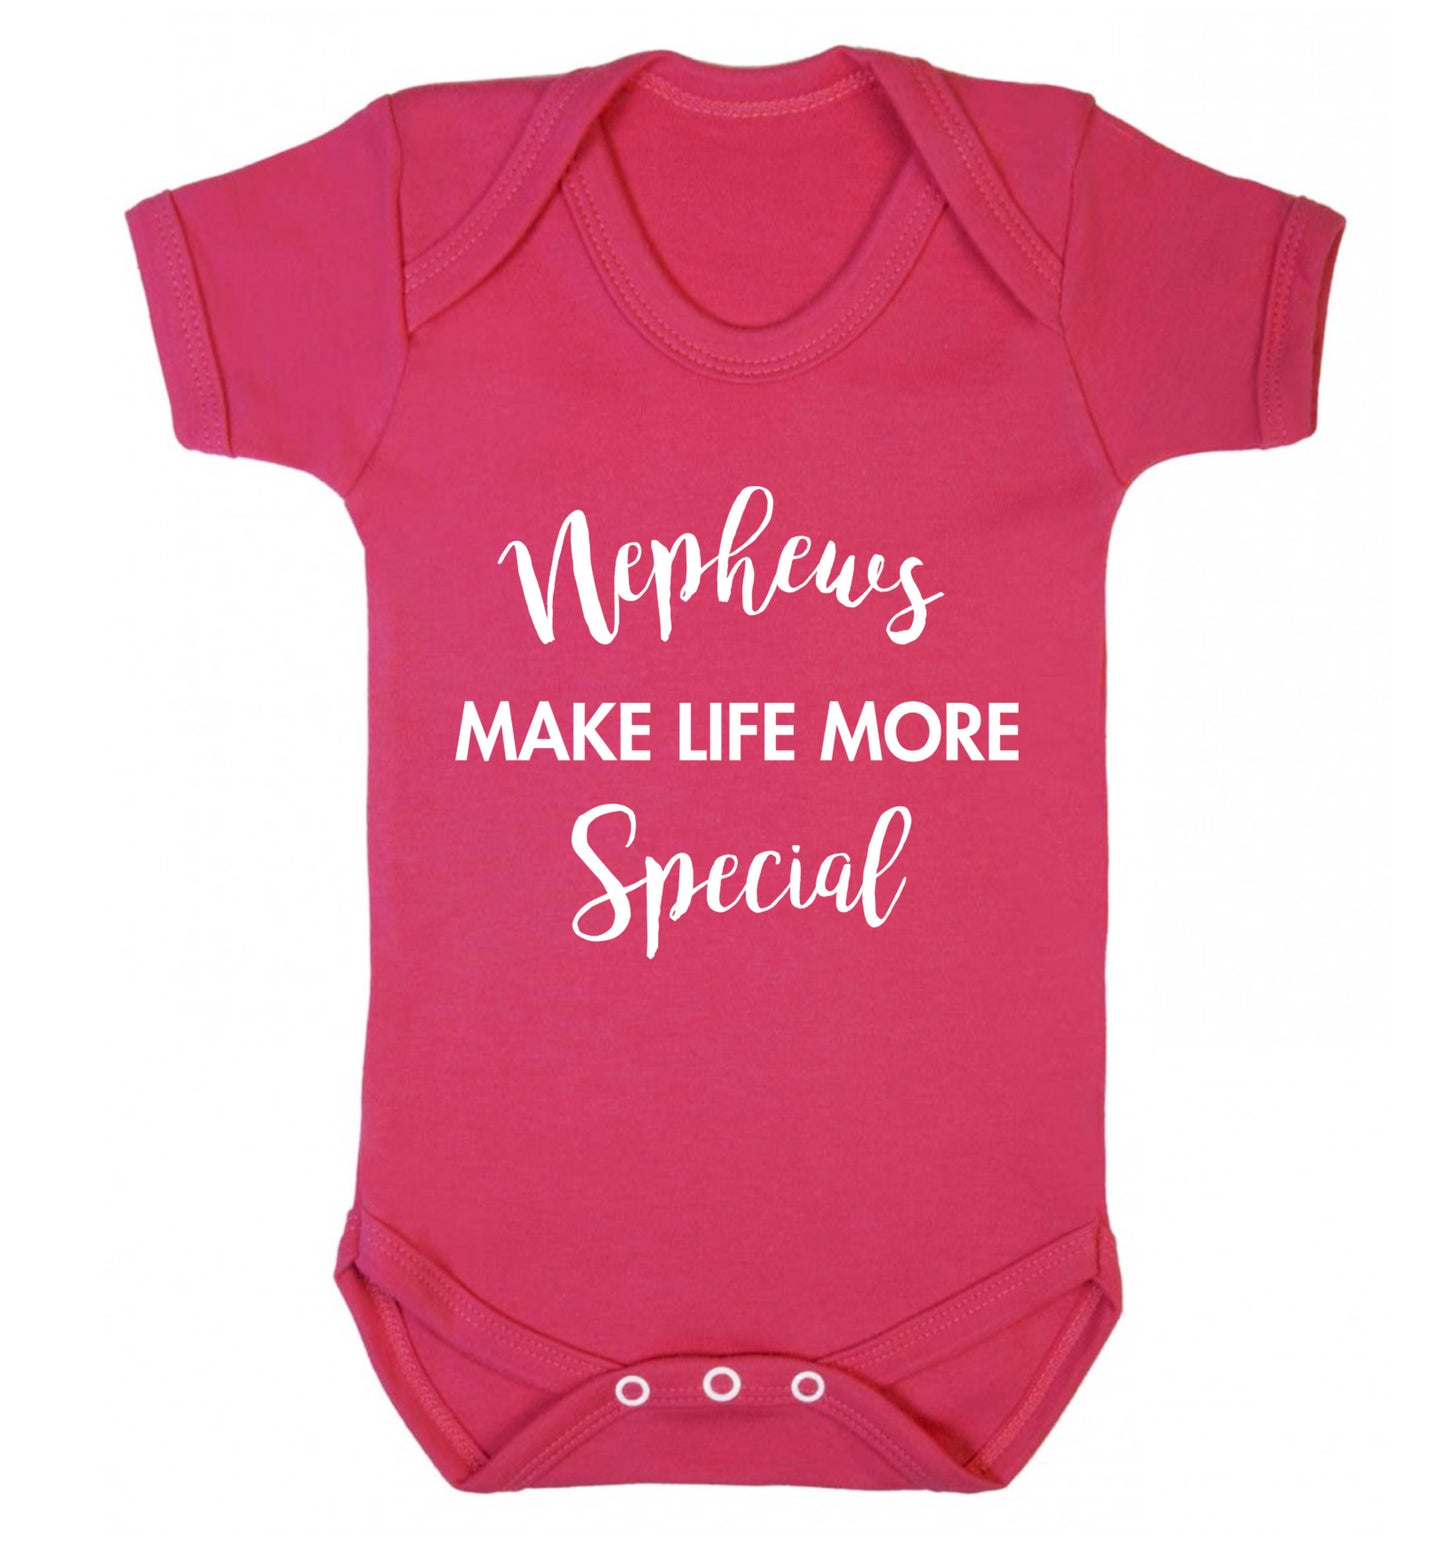 Nephews make life more special Baby Vest dark pink 18-24 months